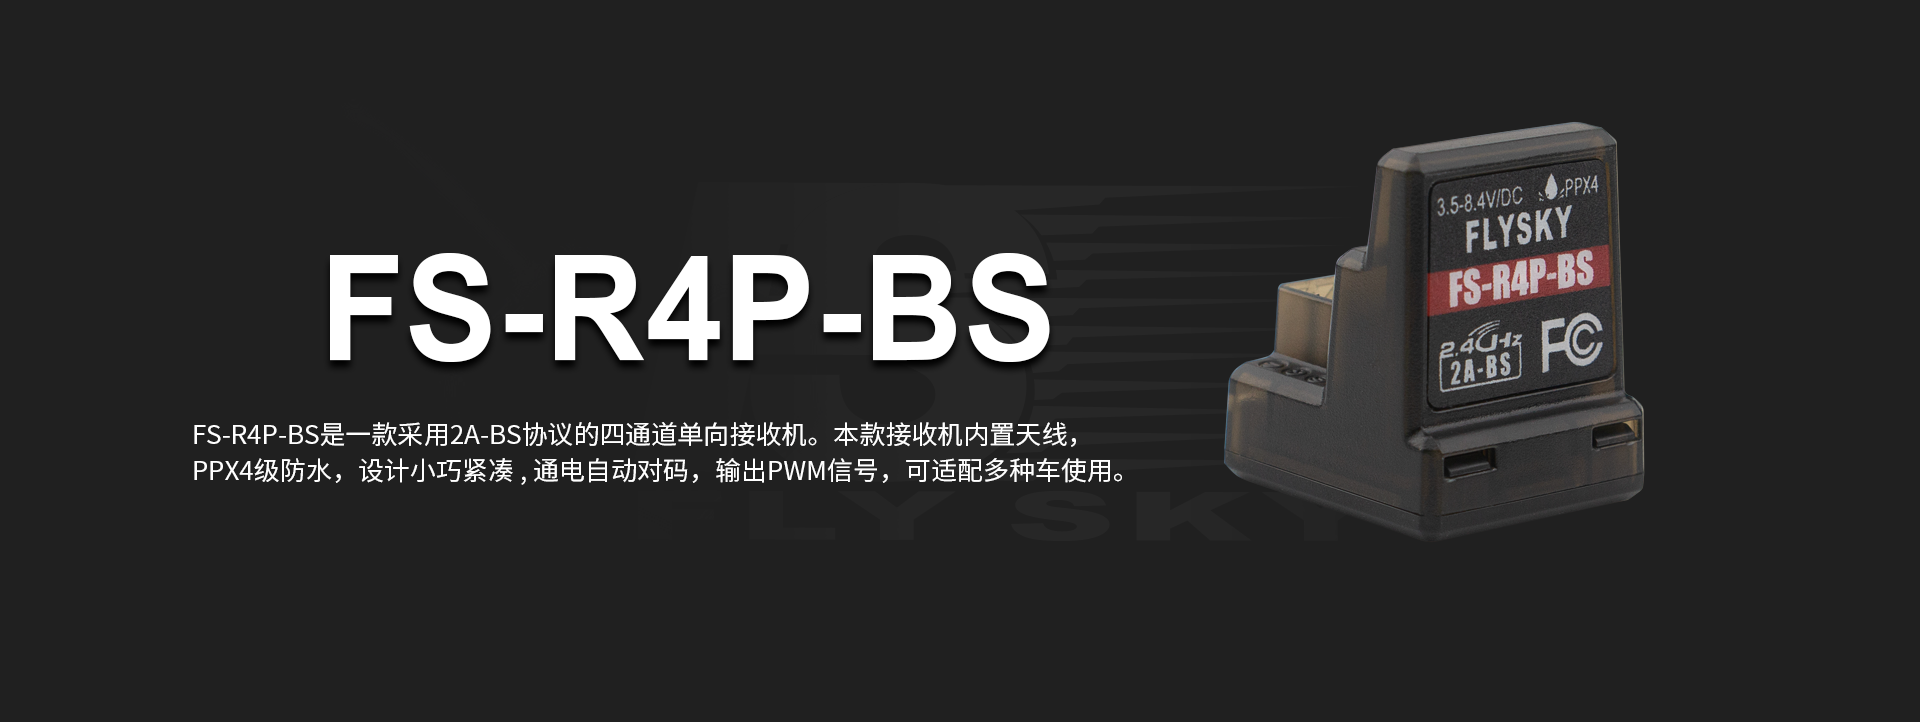 FS-R4P-BS